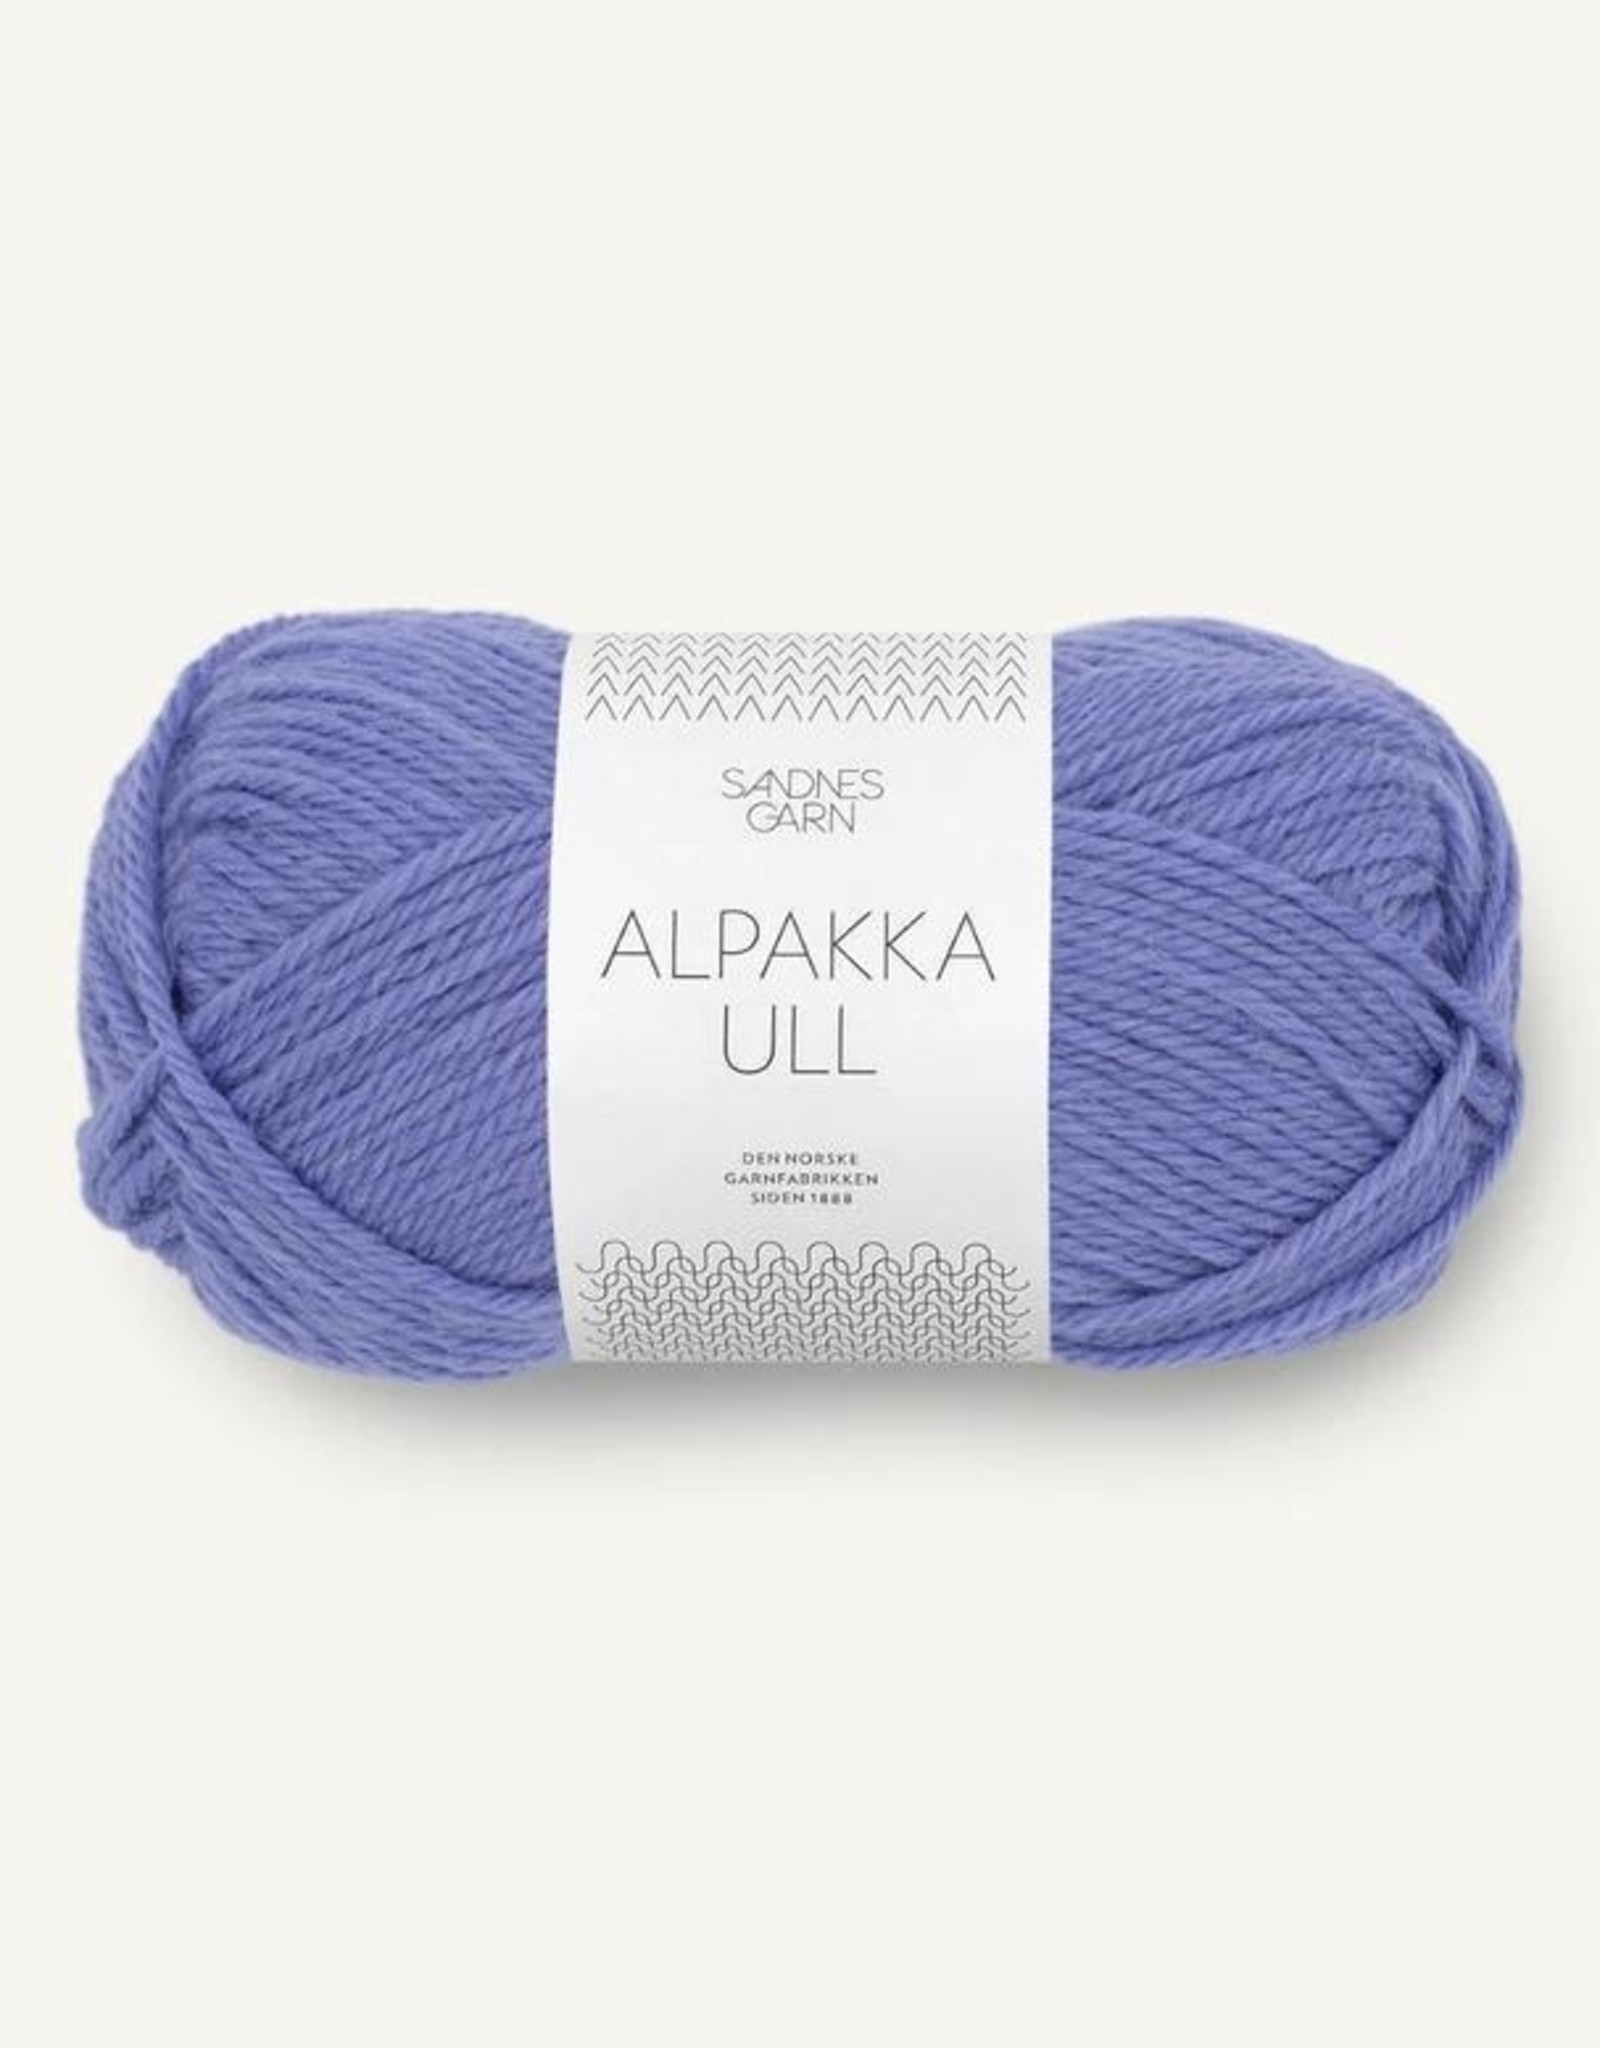 Sandnes Garn Alpakka Ull 5535 blue iris